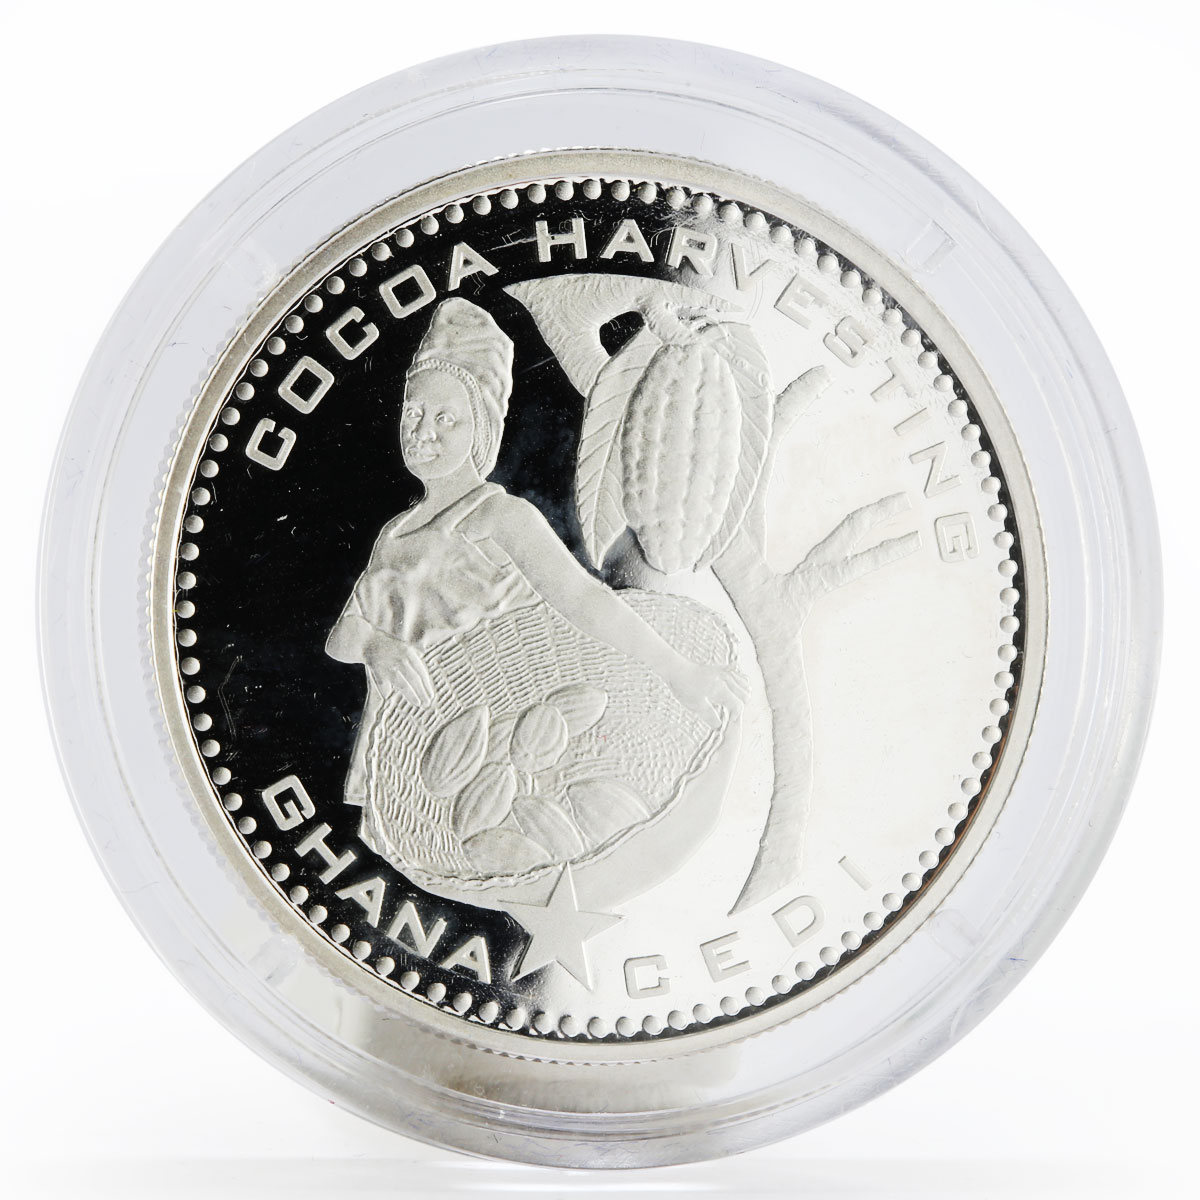 Ghana 1 cedi Cocoa Harvesting proof silver coin 2007